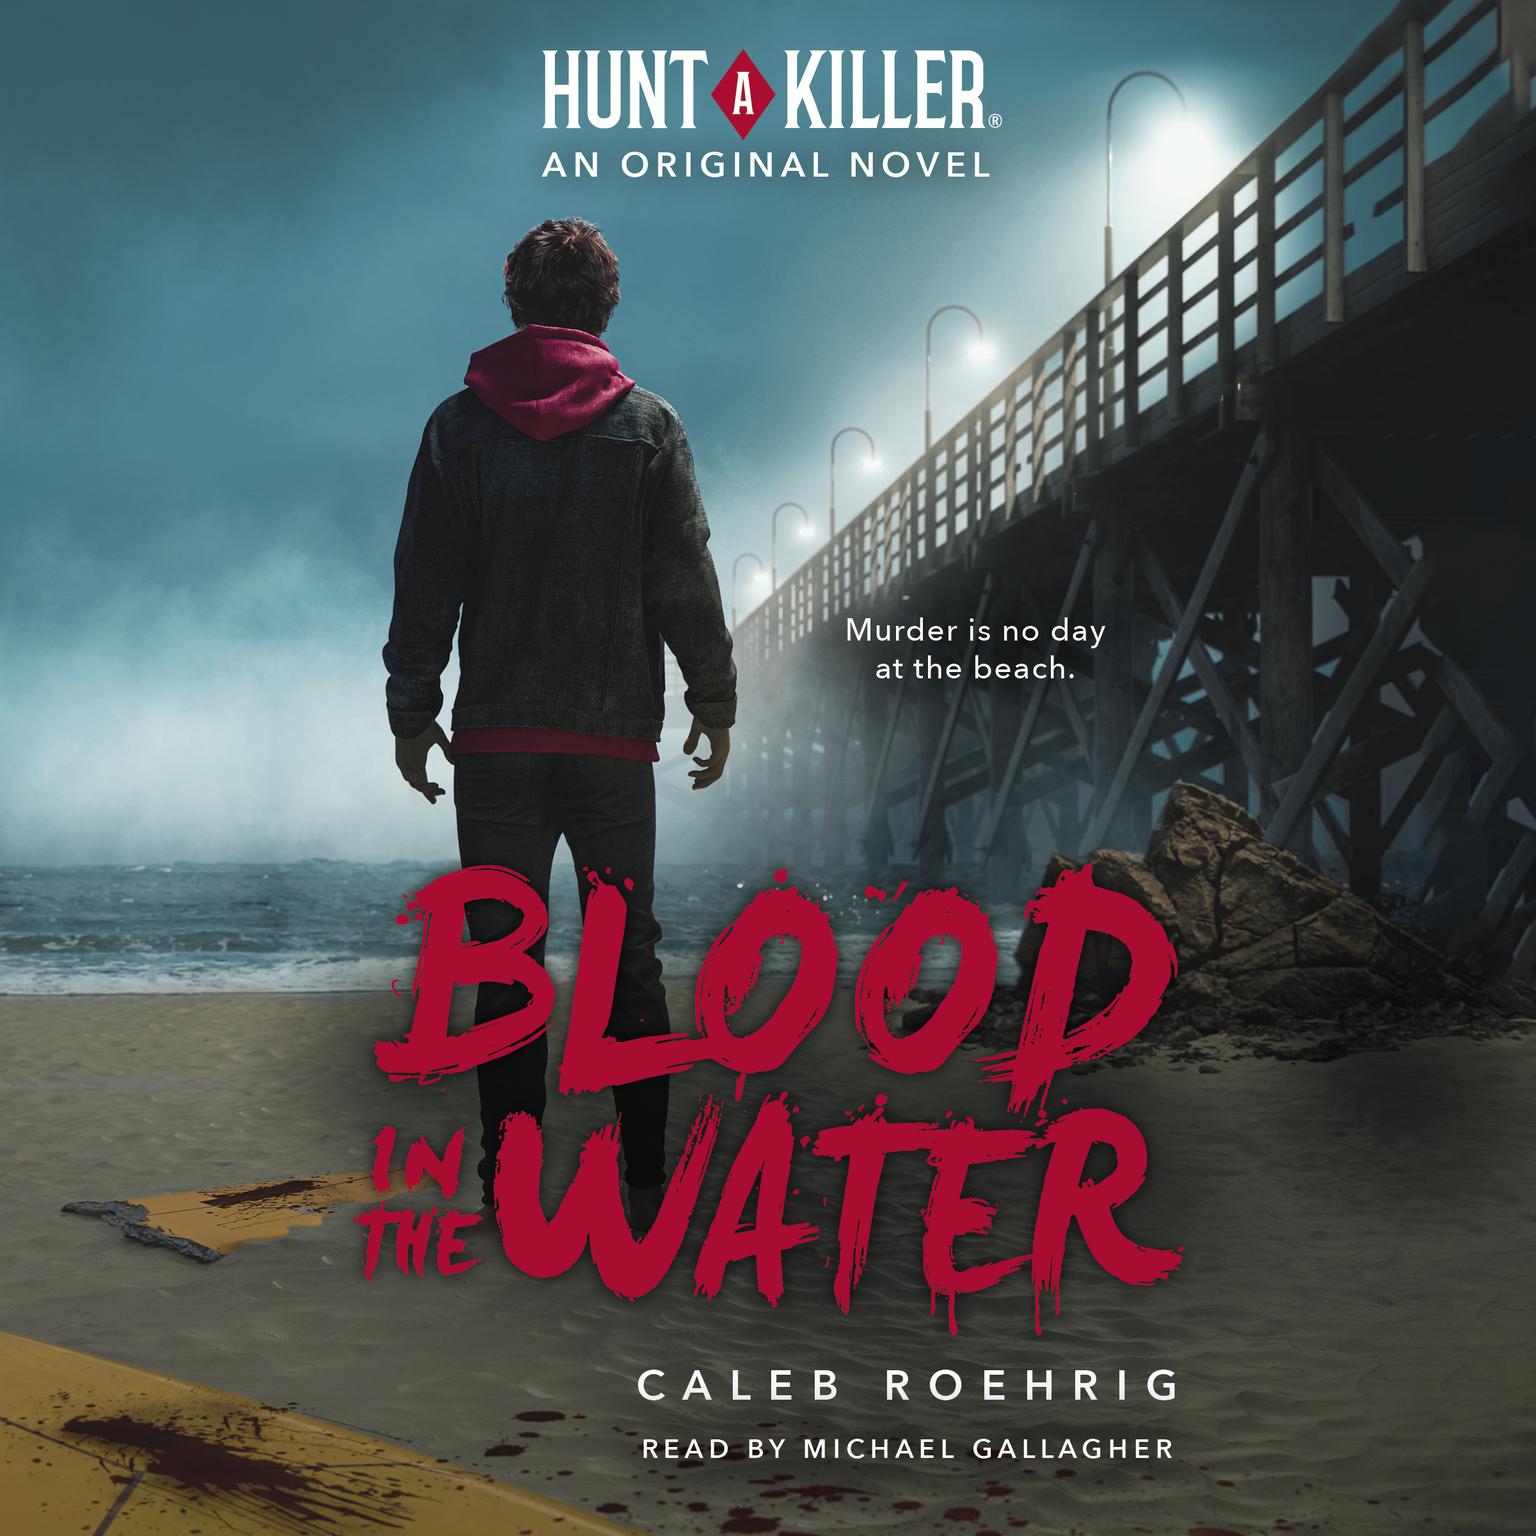 Blood in the Water (Hunt A Killer Original Novel) Audiobook, by Caleb Roehrig